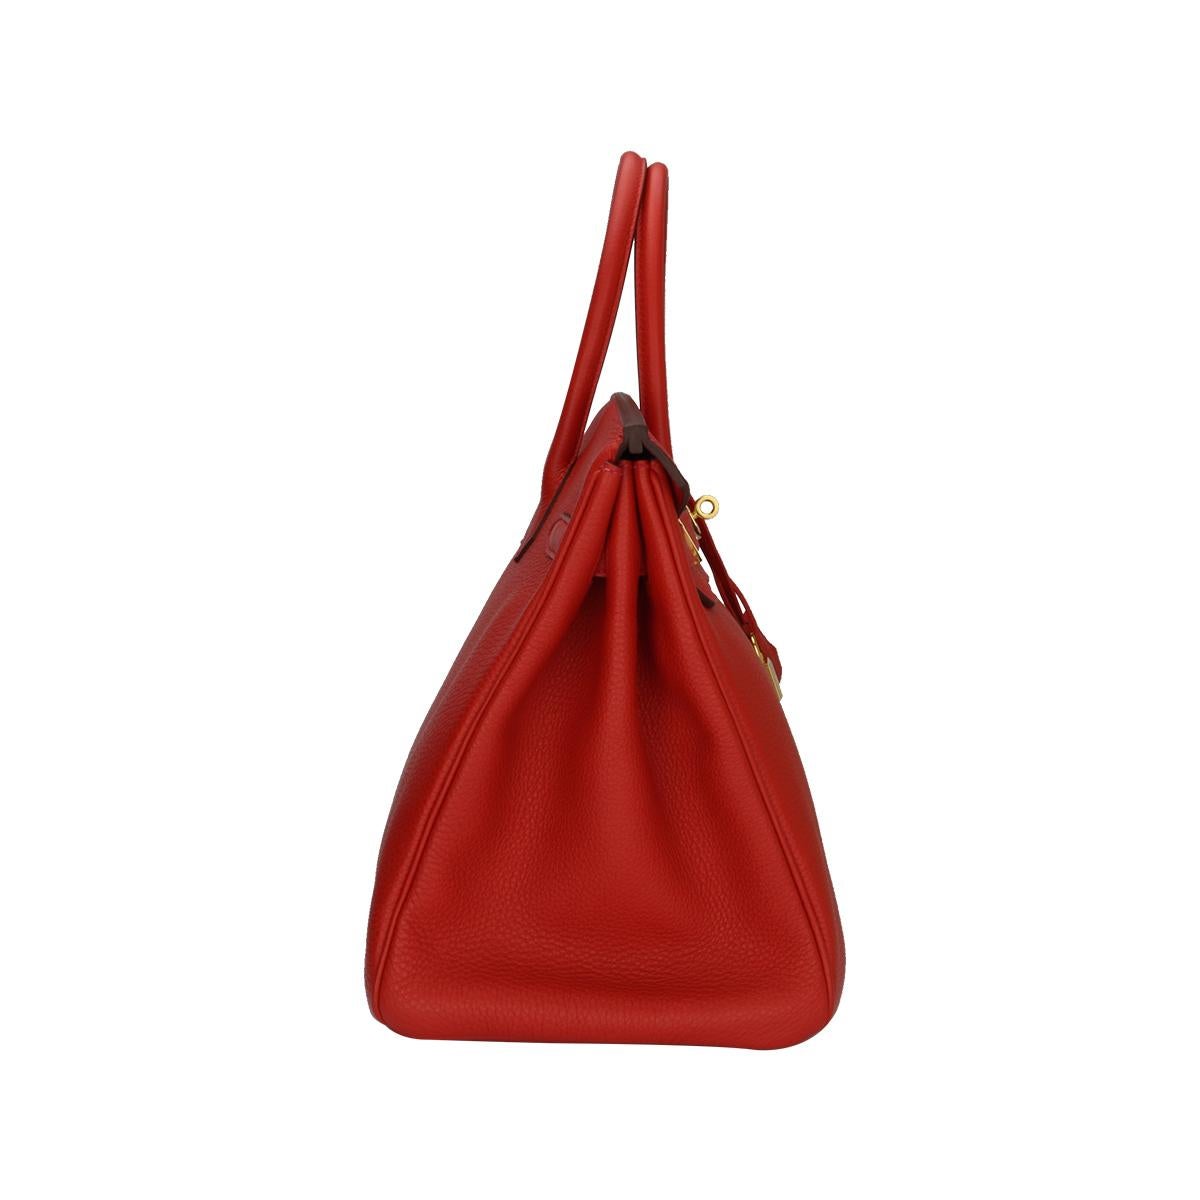 Red Hermès Birkin 35cm Bag Geranium Togo Leather with Gold Hardware Stamp P 2012